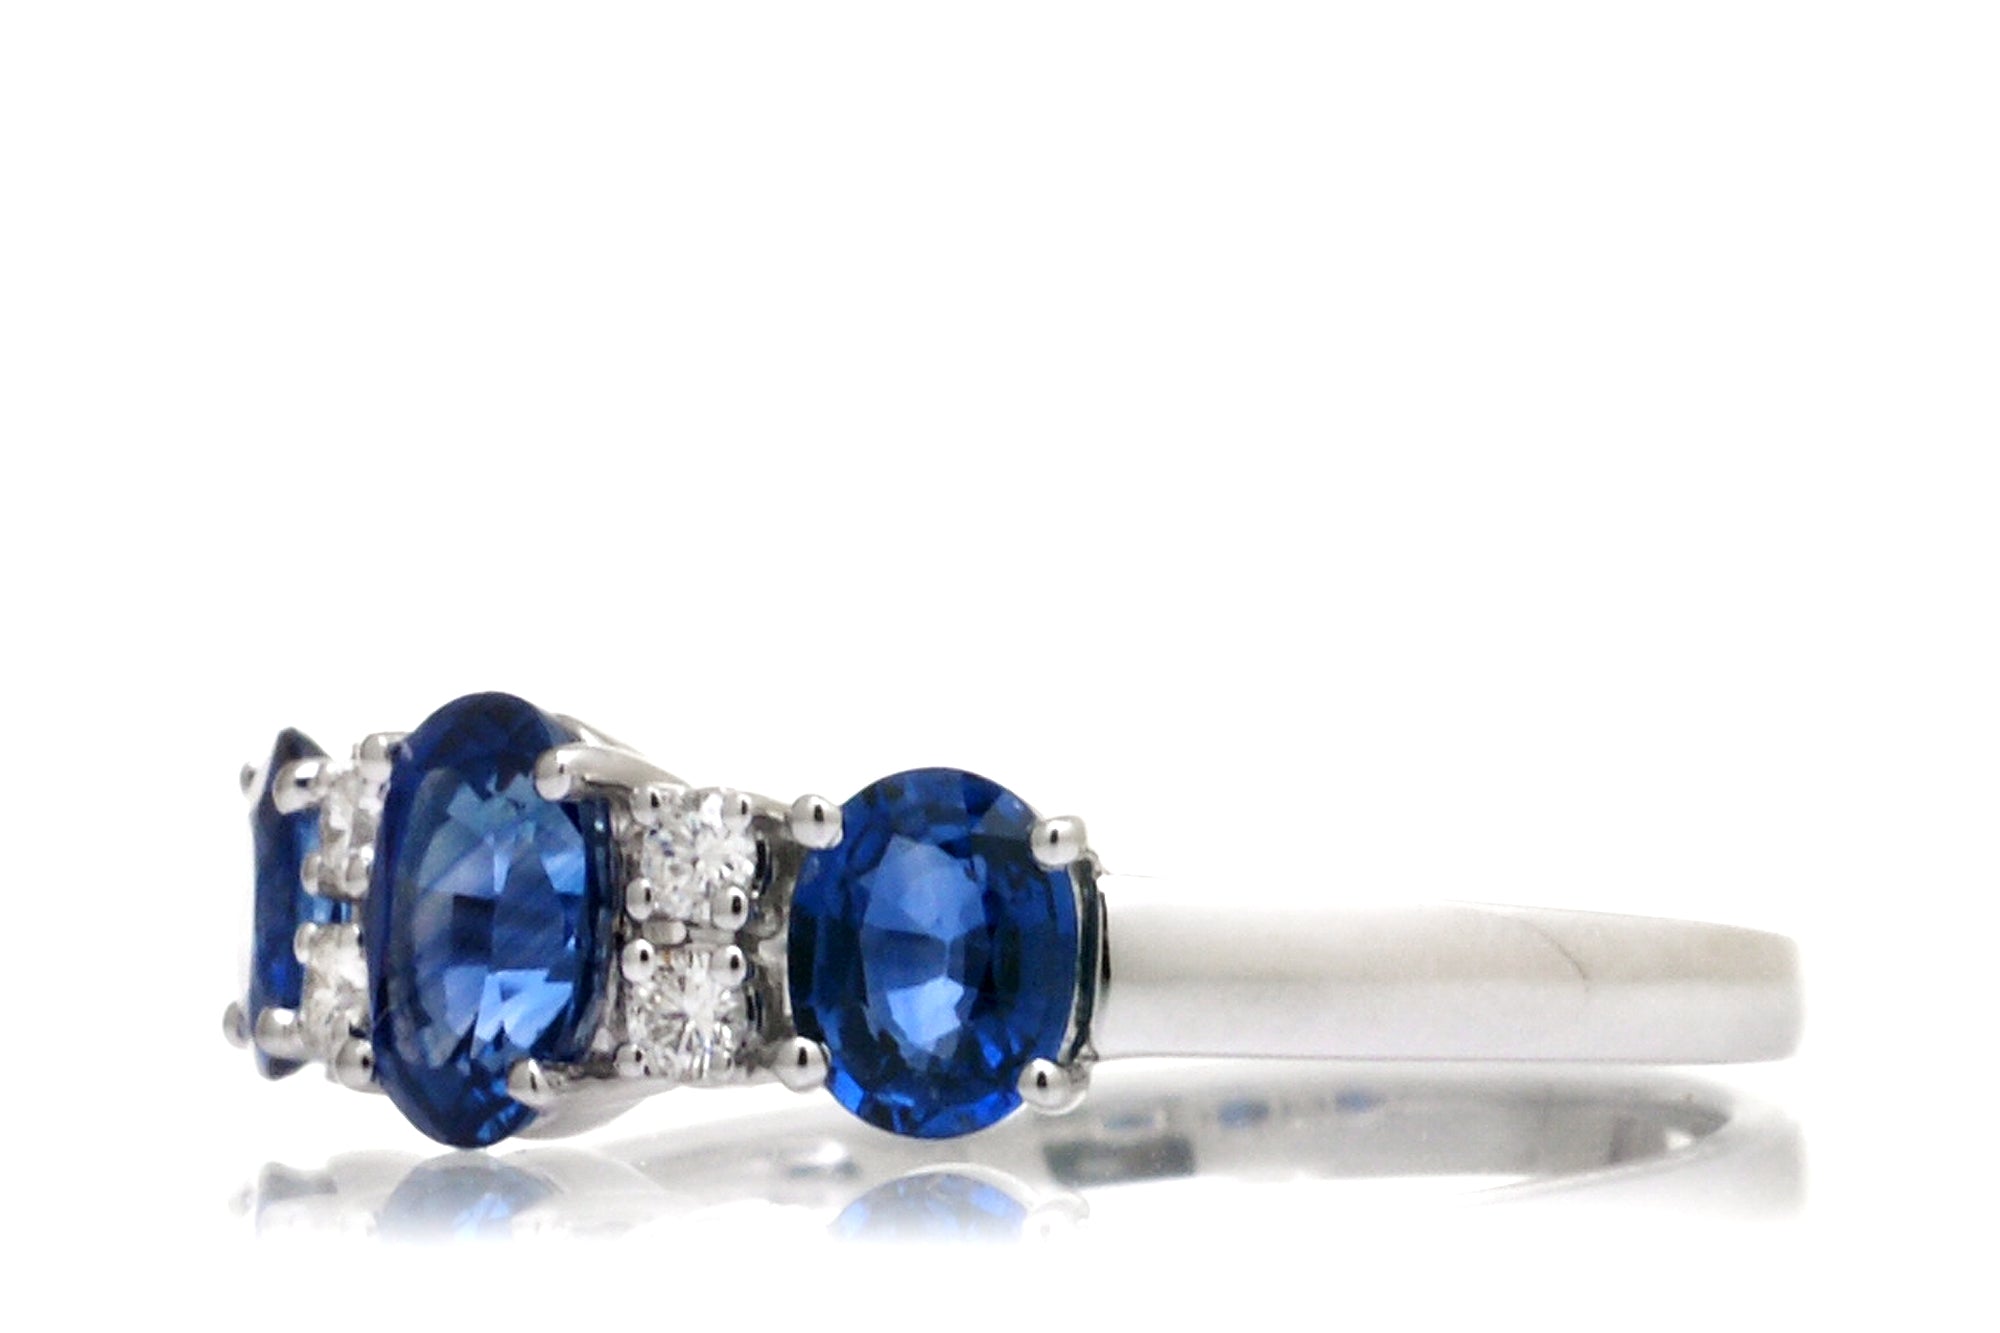 The Panya Oval Sapphire Ring